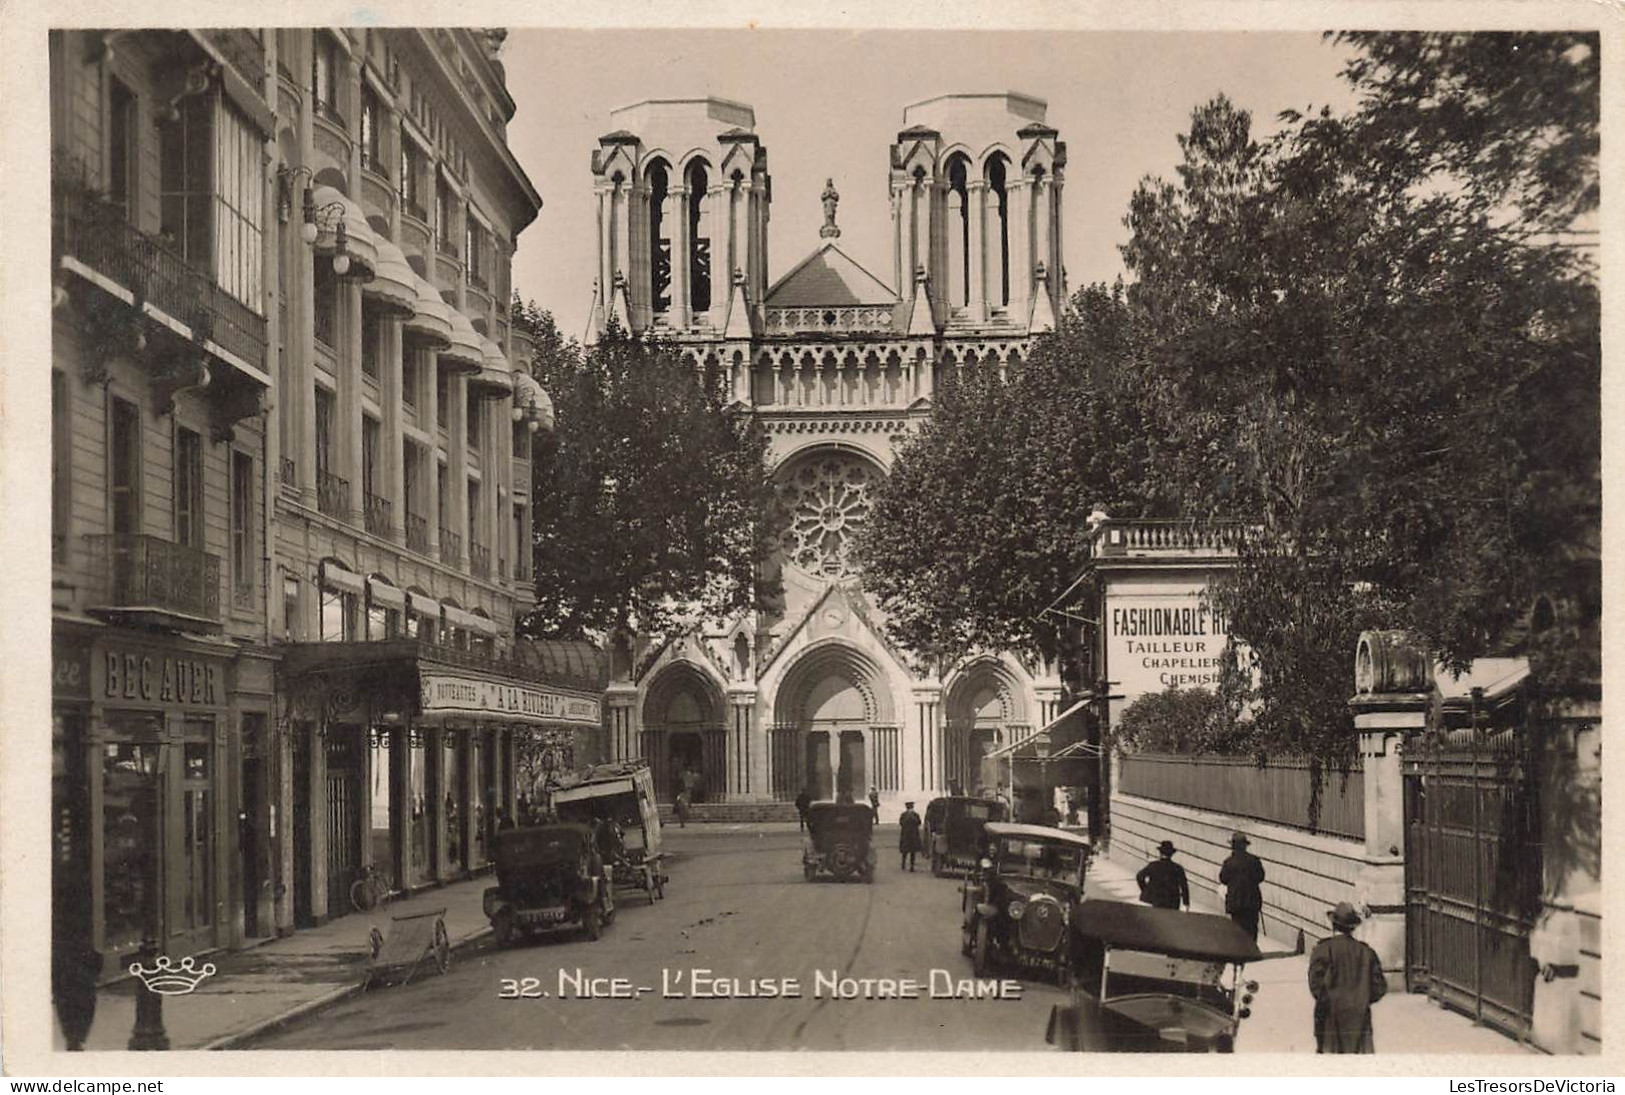 FRANCE - Nice - L'Eglise Notre Dame - Fashionable Tailleur Chapellier - Animé - Carte Postale Ancienne - Bauwerke, Gebäude